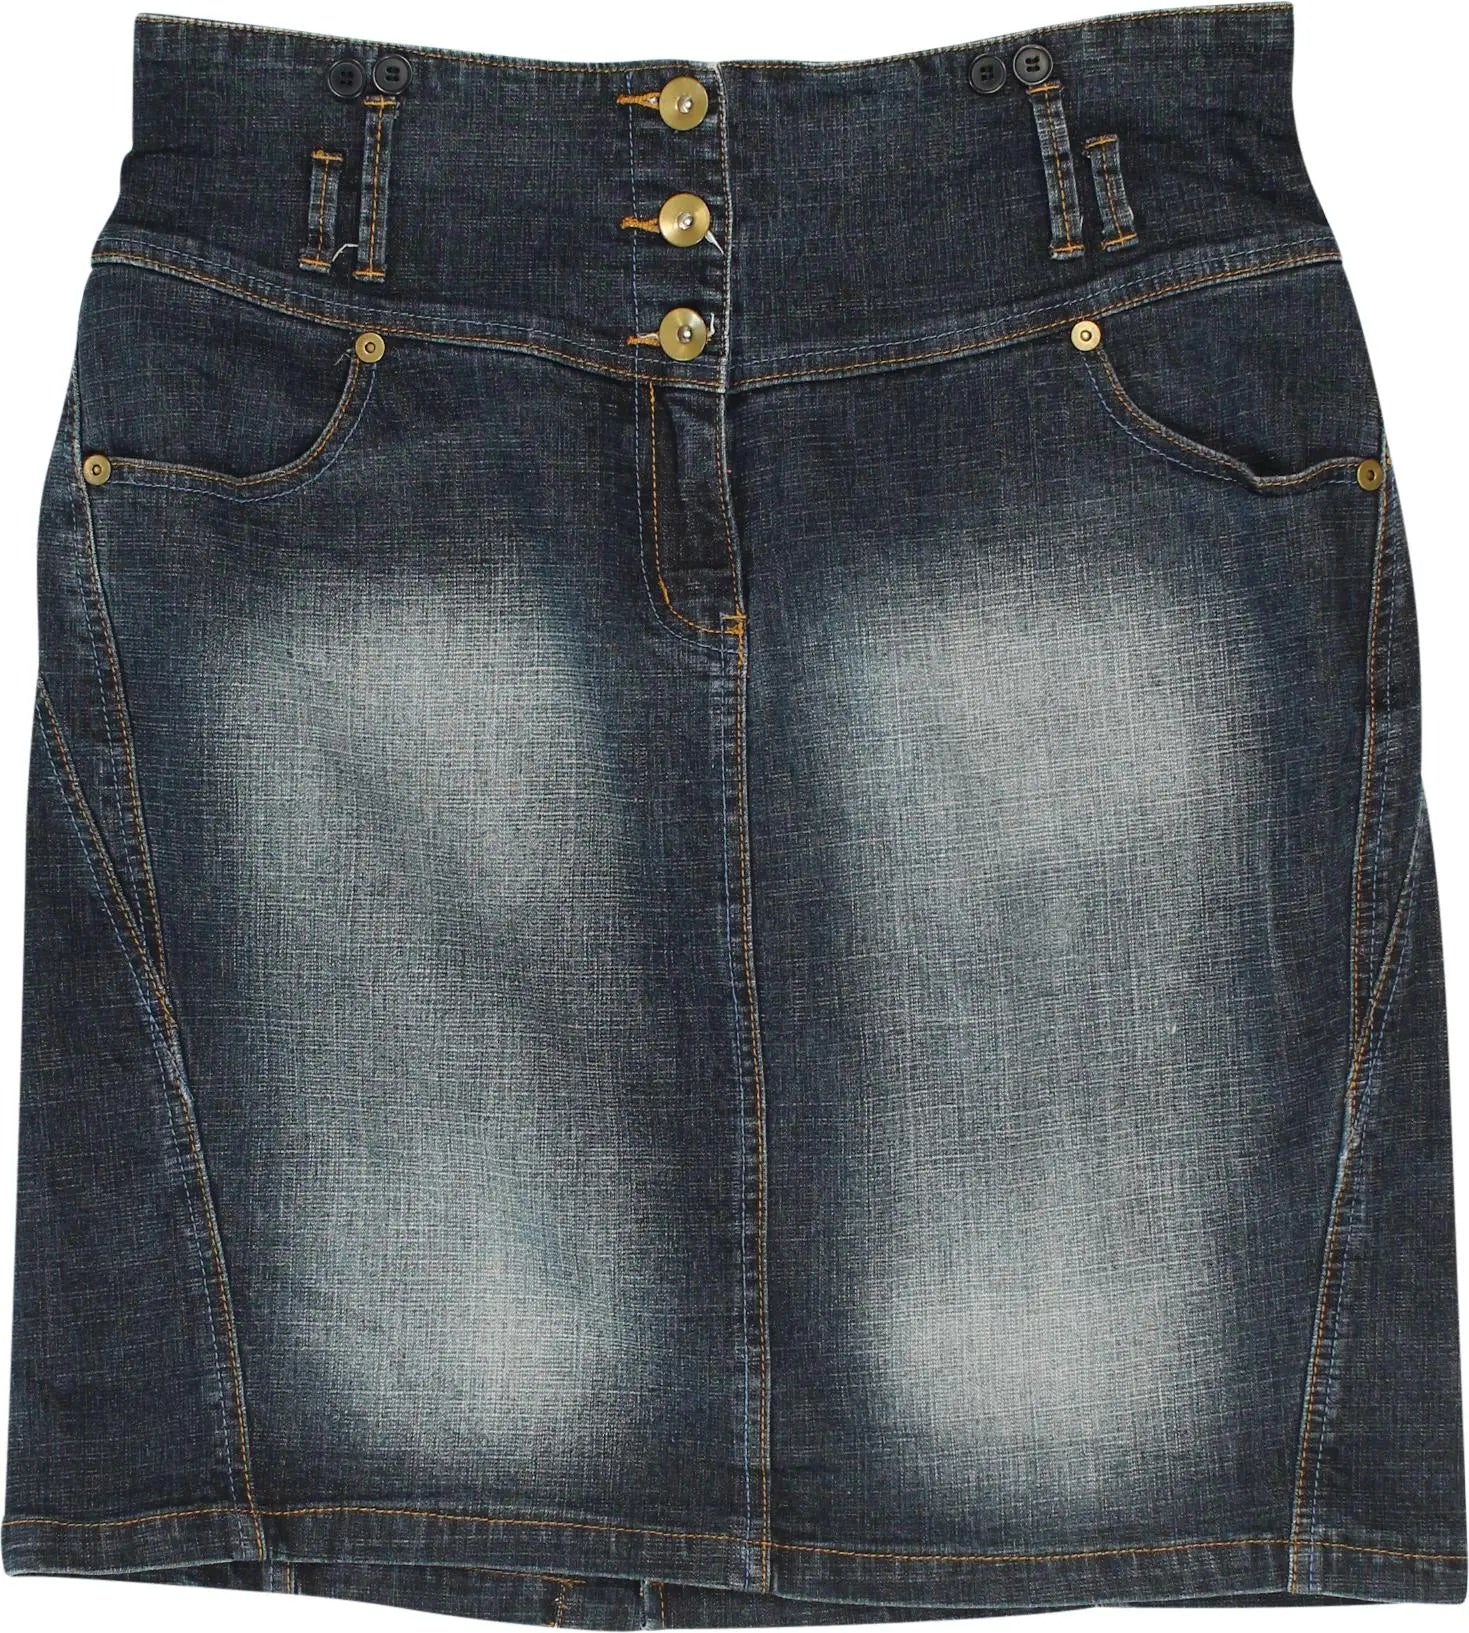 Reject - Denim Skirt- ThriftTale.com - Vintage and second handclothing